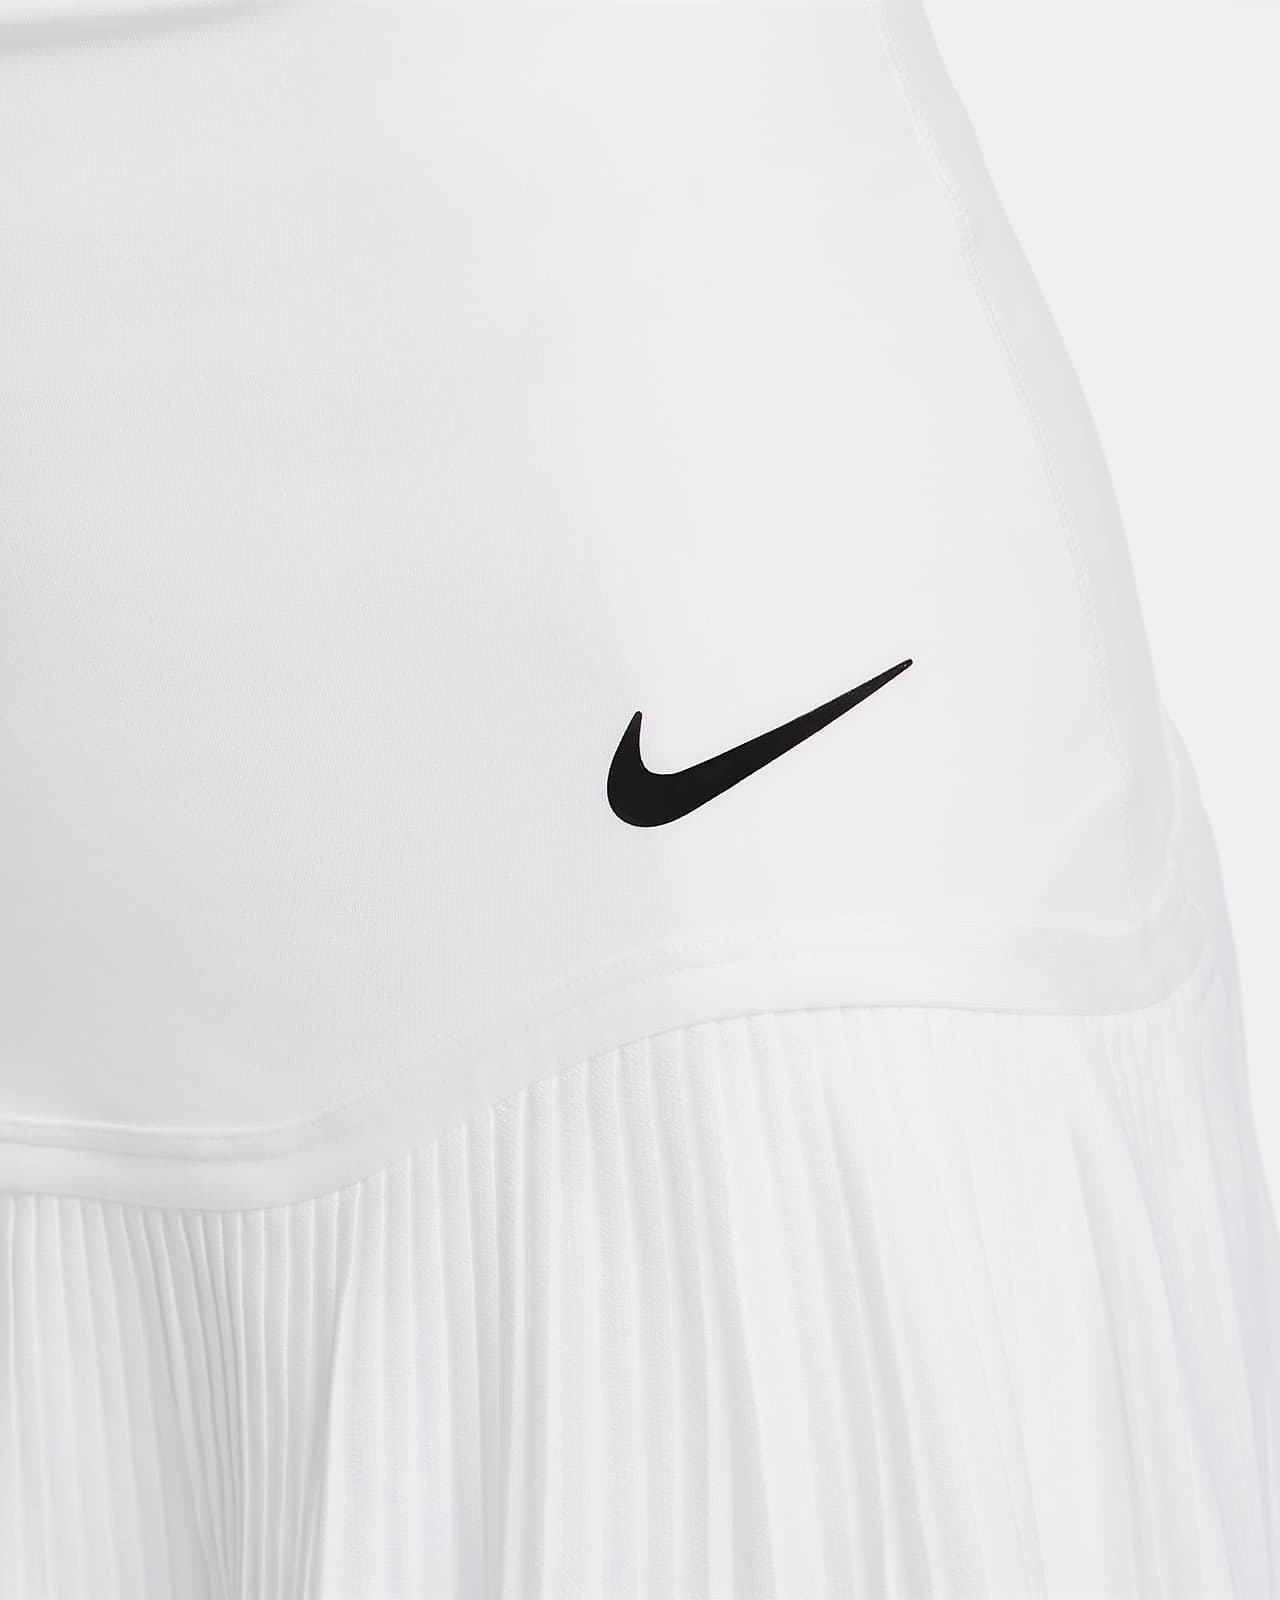 Nike Dri-FIT Advantage Women's Tennis Skirt